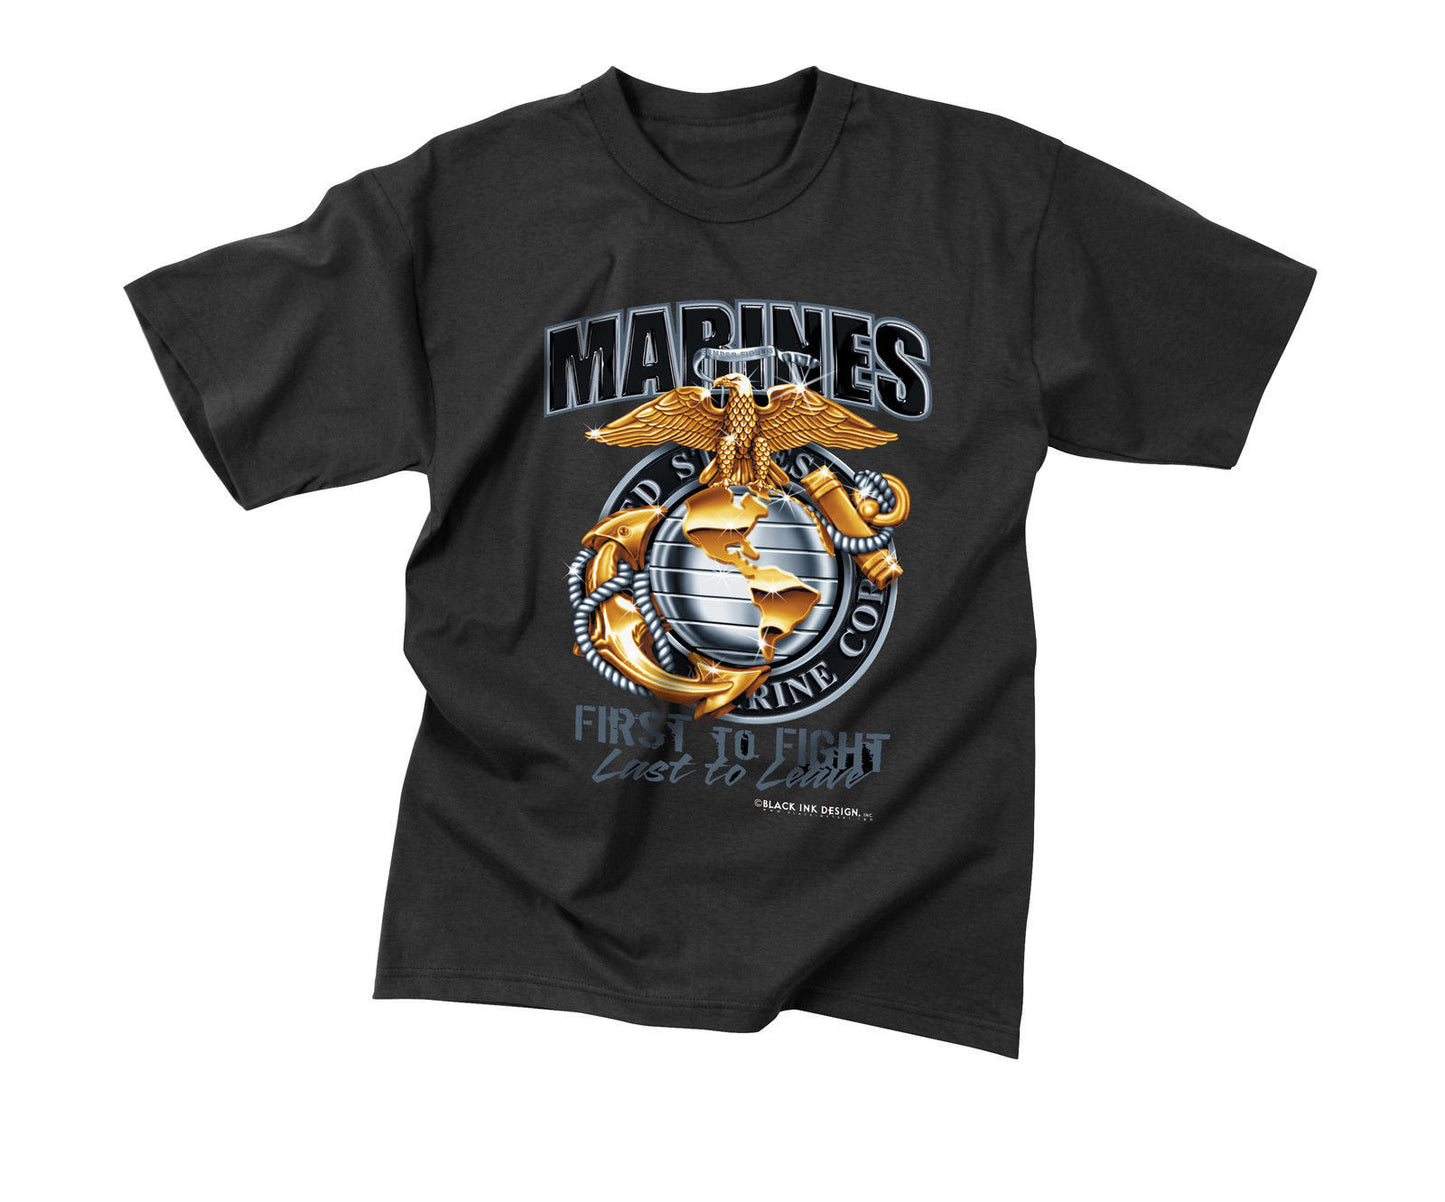 Black Ink - "Marines" Globe And Anchor T-Shirt